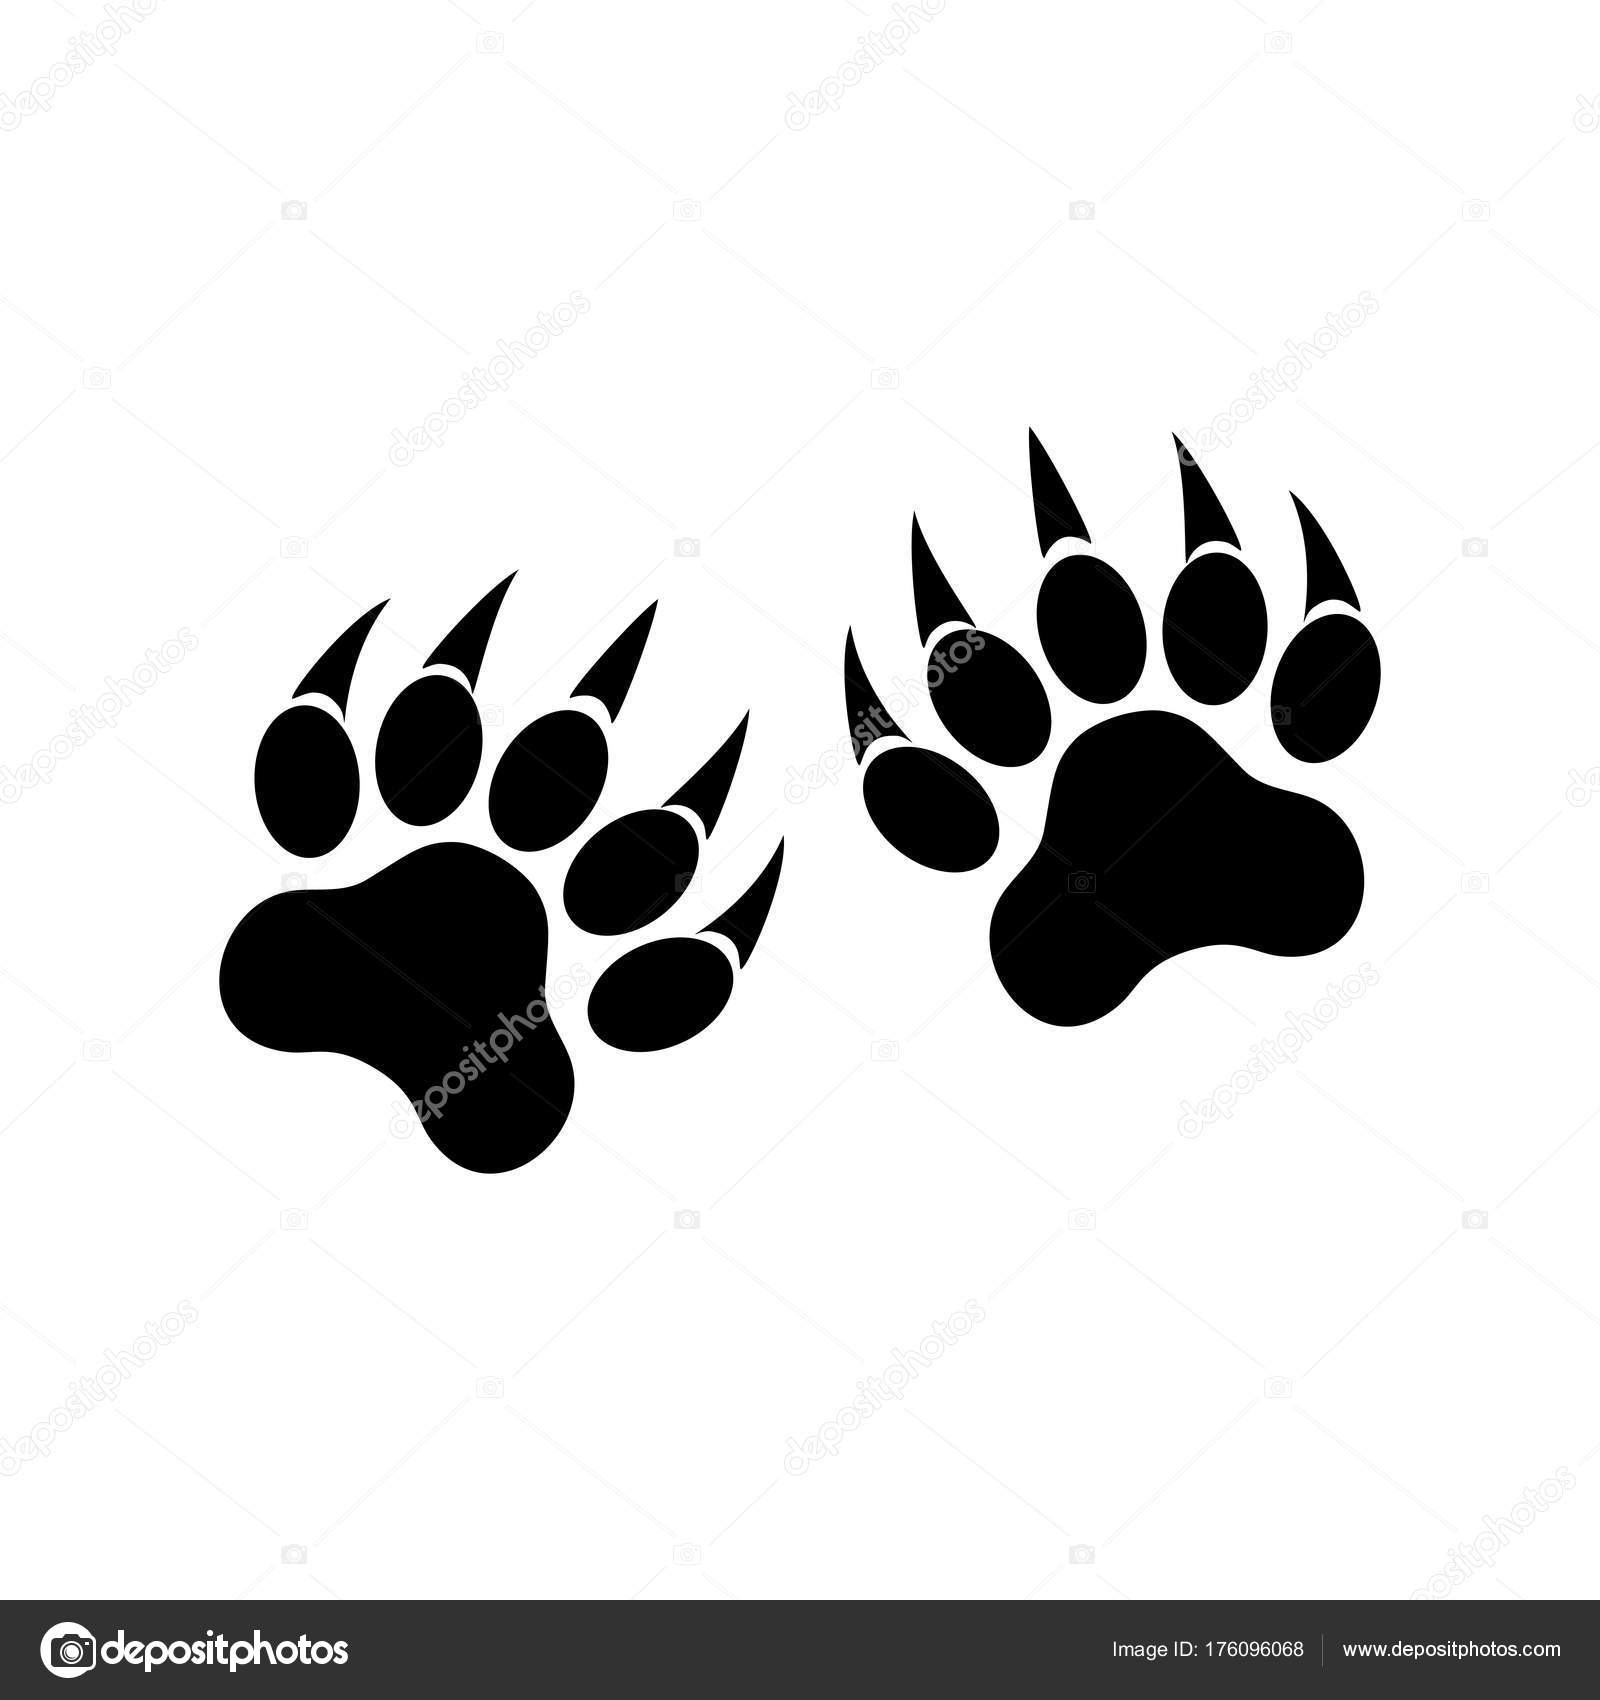 Animal paws photo